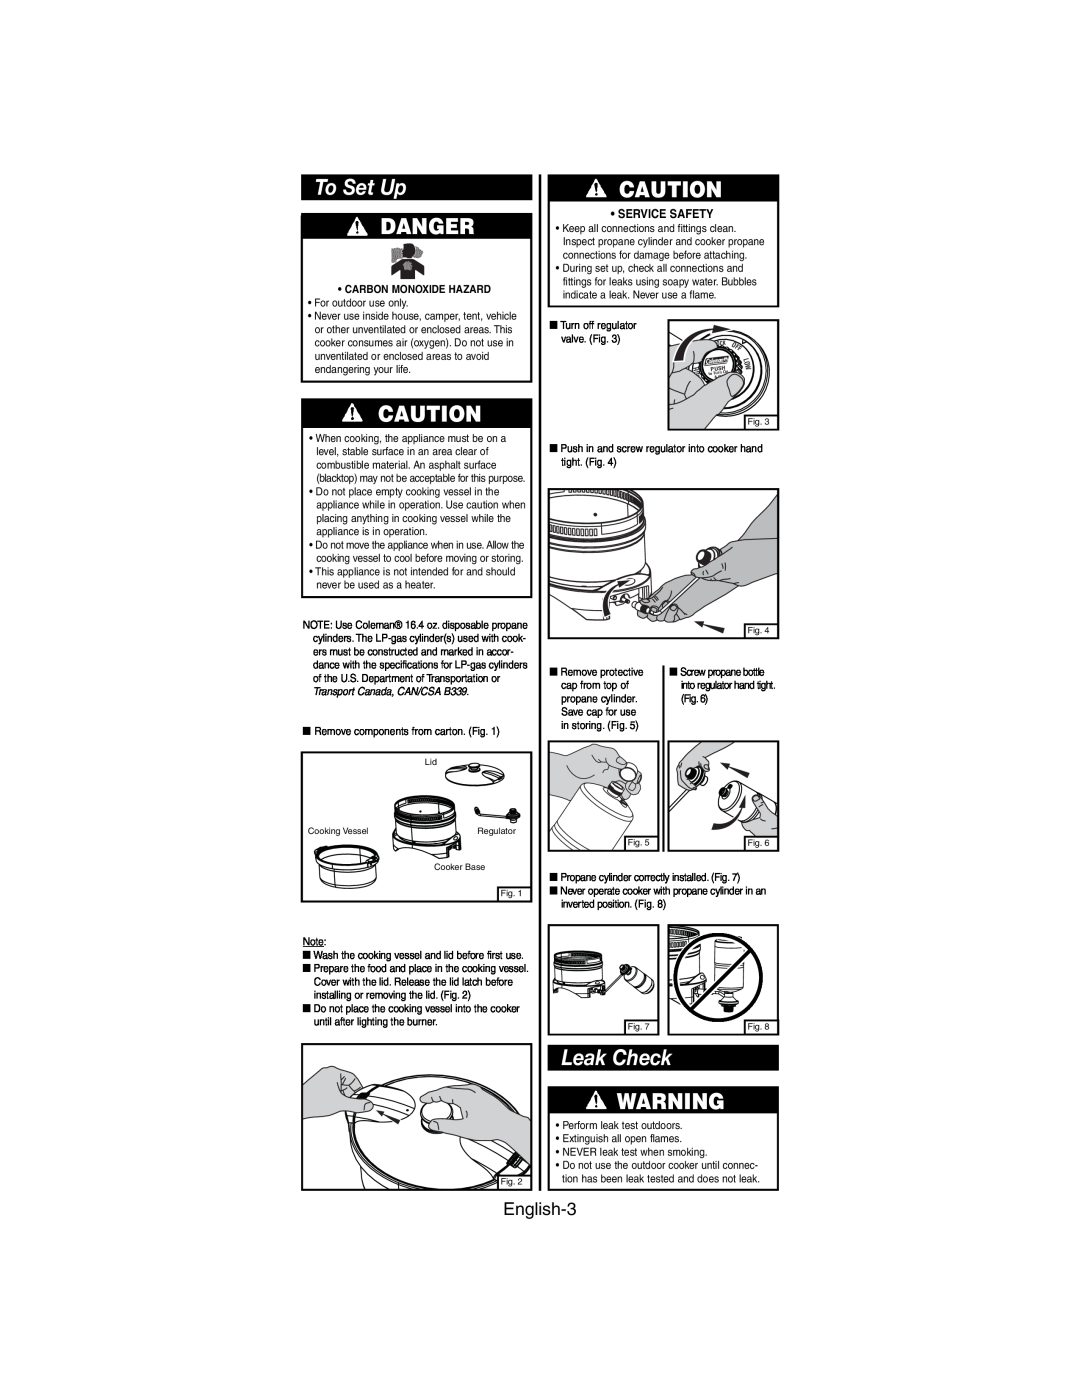 Coleman 9935 series manual To Set Up, Leak Check, English-3, Danger, Service Safety, Carbon Monoxide Hazard 